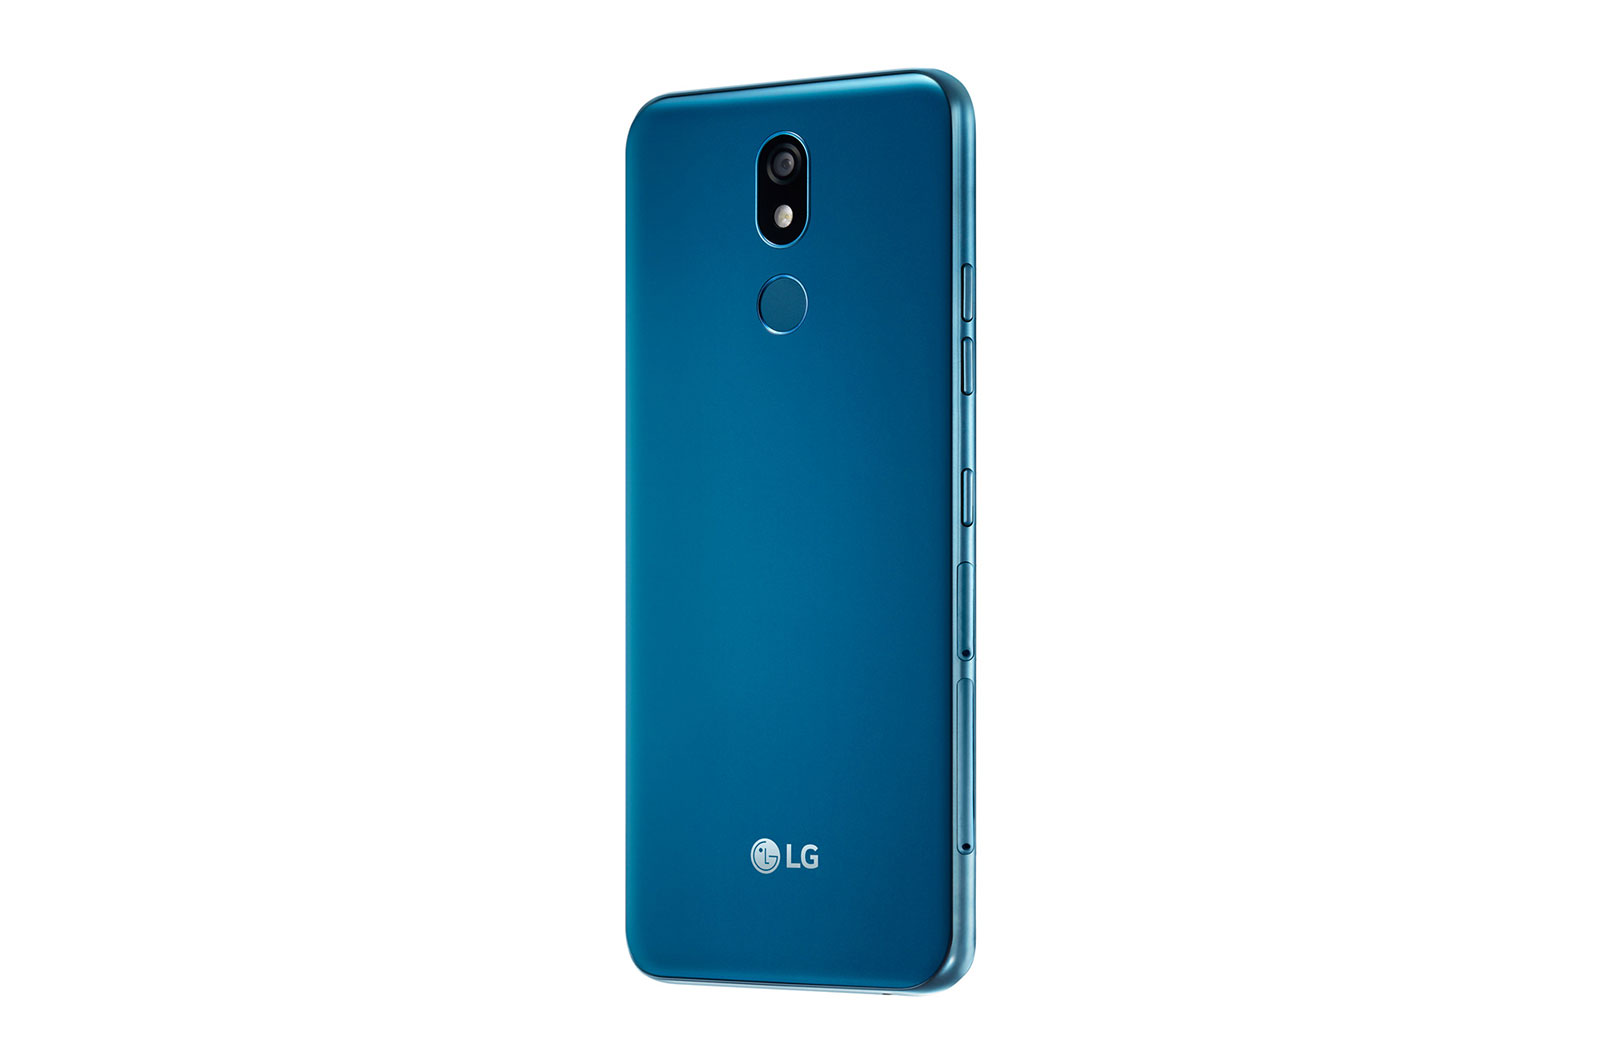 Reparatie mogelijk schaamte Onbepaald LG K40 Smartphone Review: A cheery and affordable handset -  NotebookCheck.net Reviews